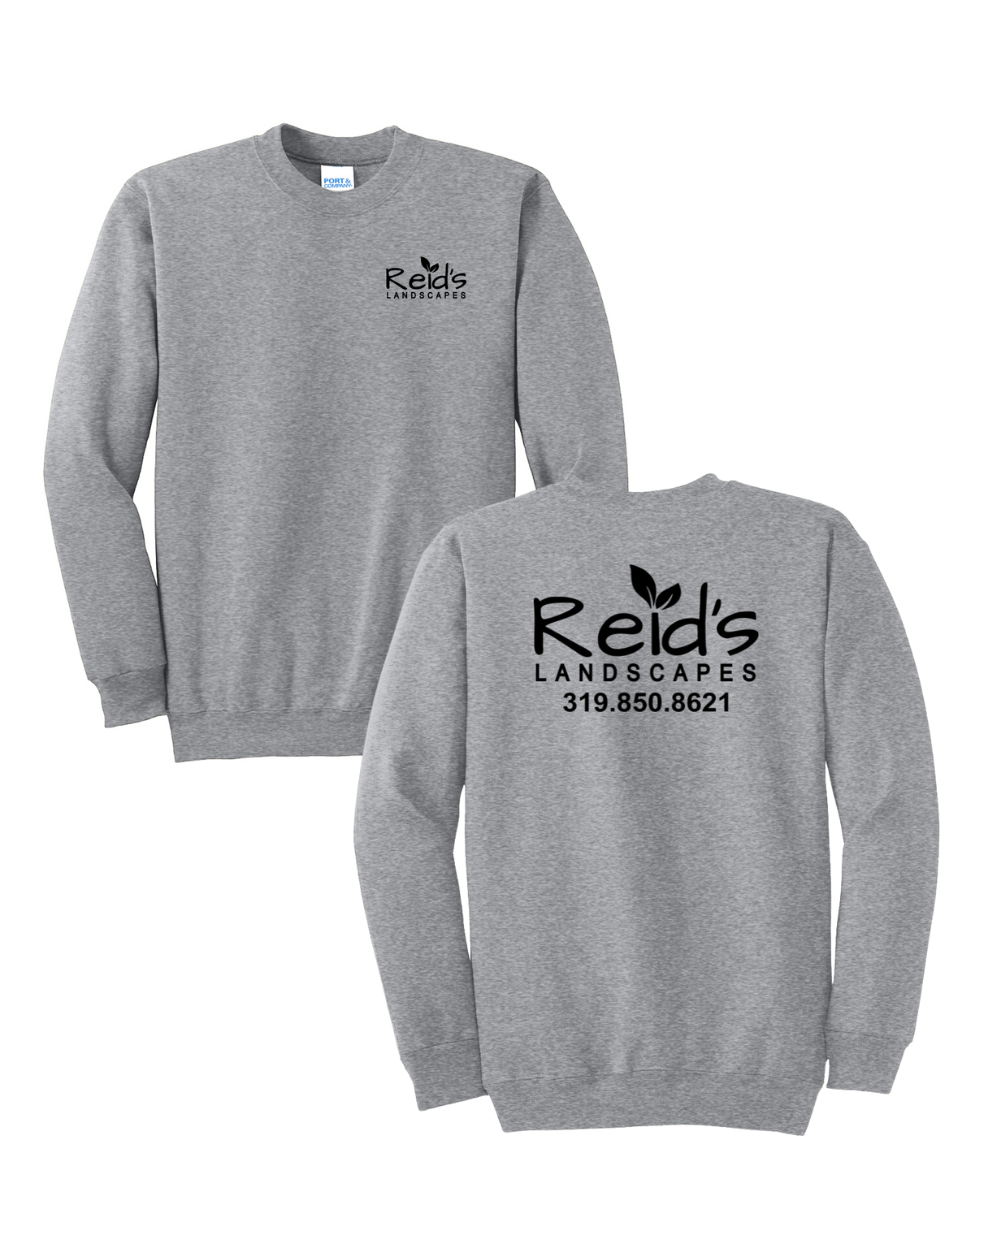 Reid's Landscapes Crewneck Sweatshirt